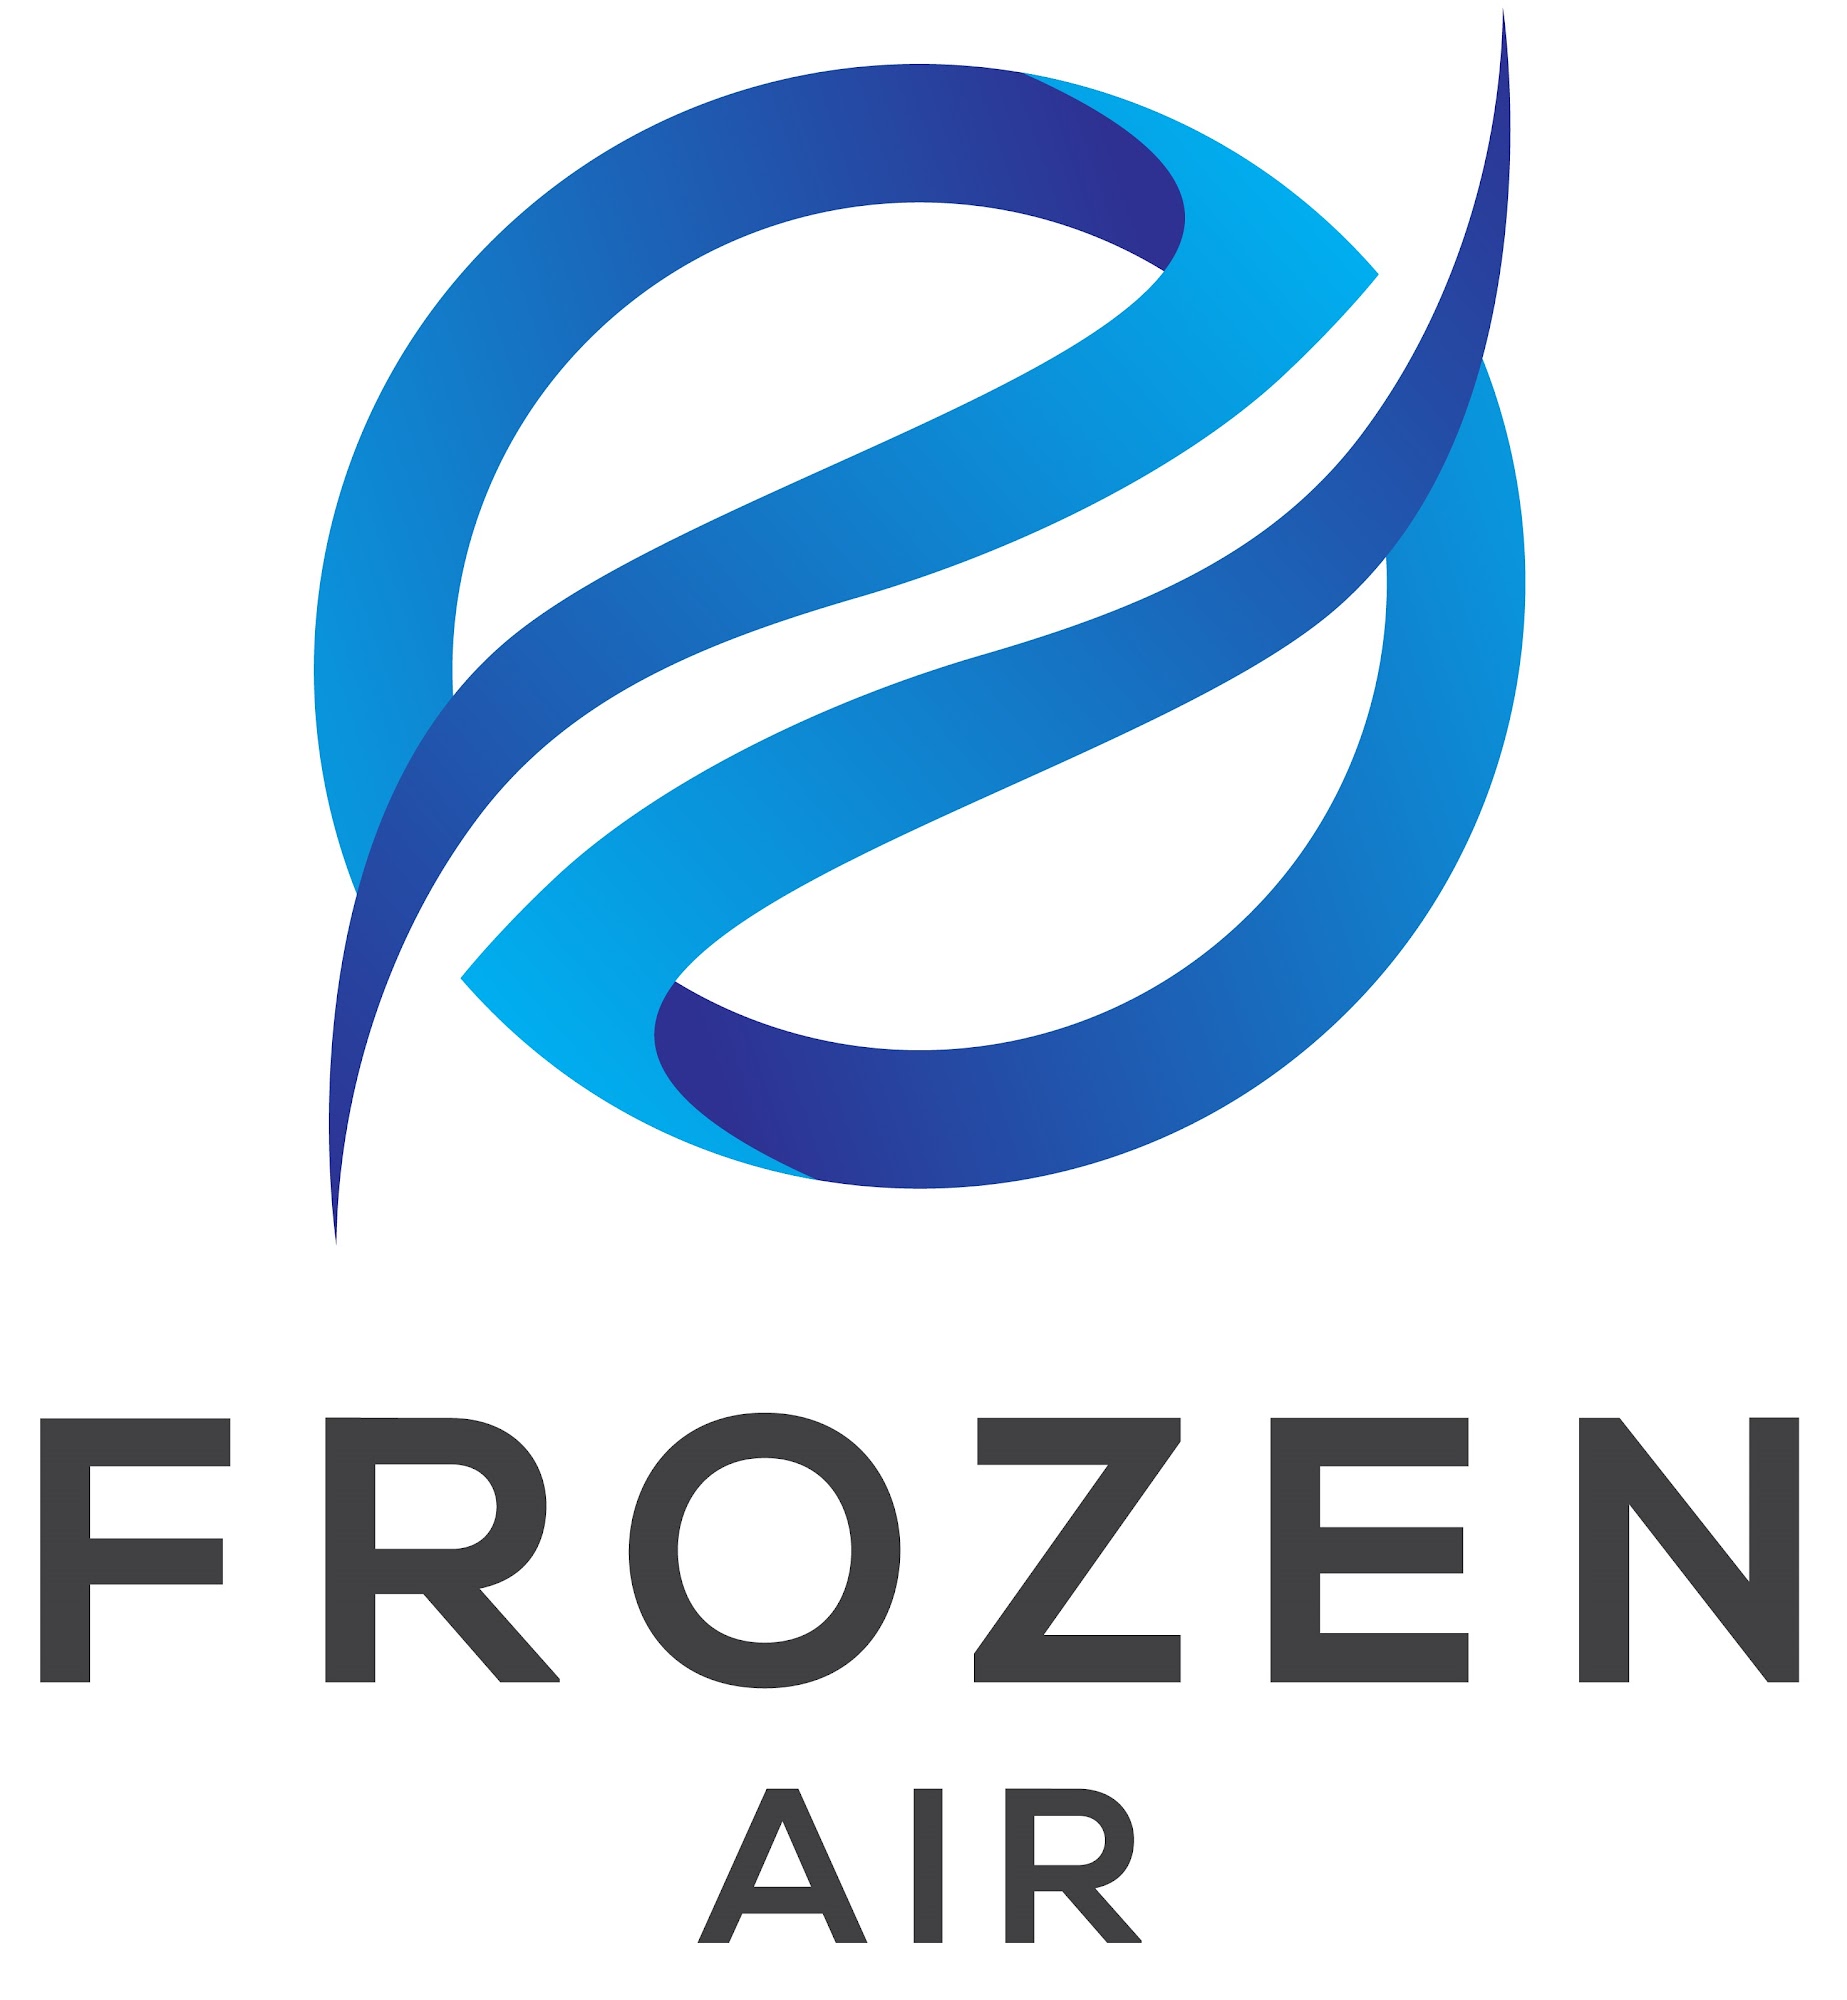 Frozen Air 9180 NE Jacksonville Rd, Anthony Florida 32617